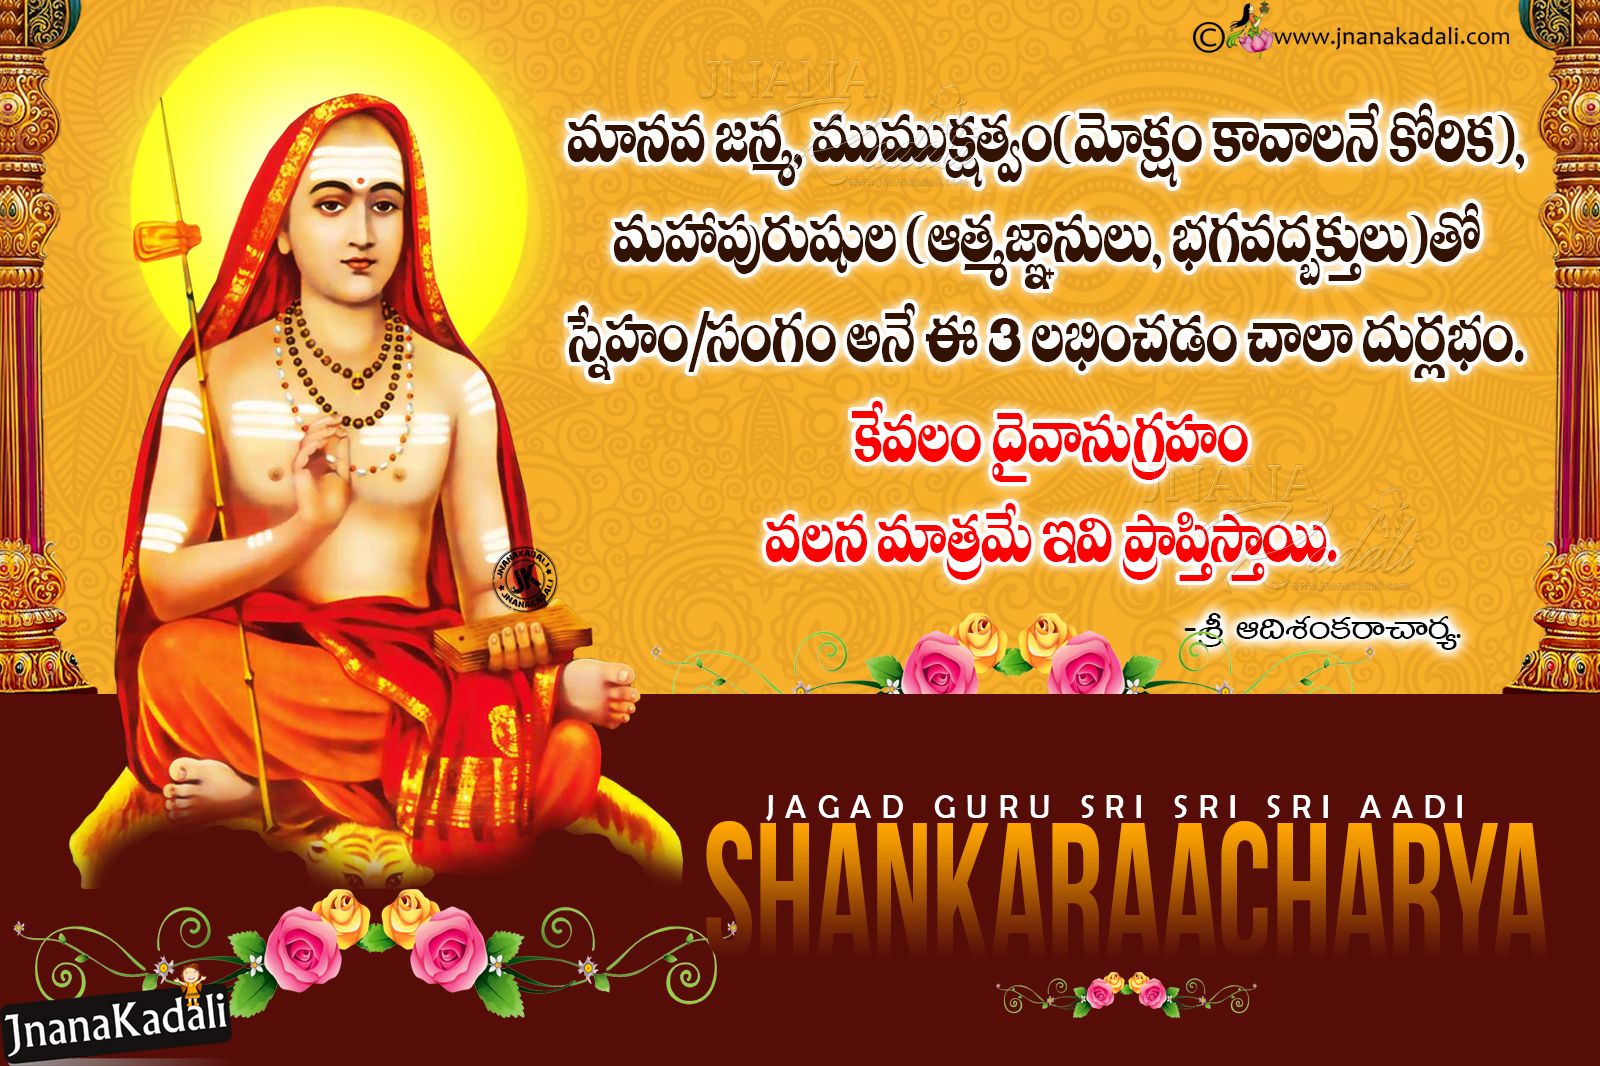 Adi Shankaracharya Spiritual Inspirational Quotes with Adi Shankaracharya HD wallpaper. JNANA KADALI.COM. Telugu Quotes. English quotes. Hindi quotes. Tamil quotes. Dharmasandehalu